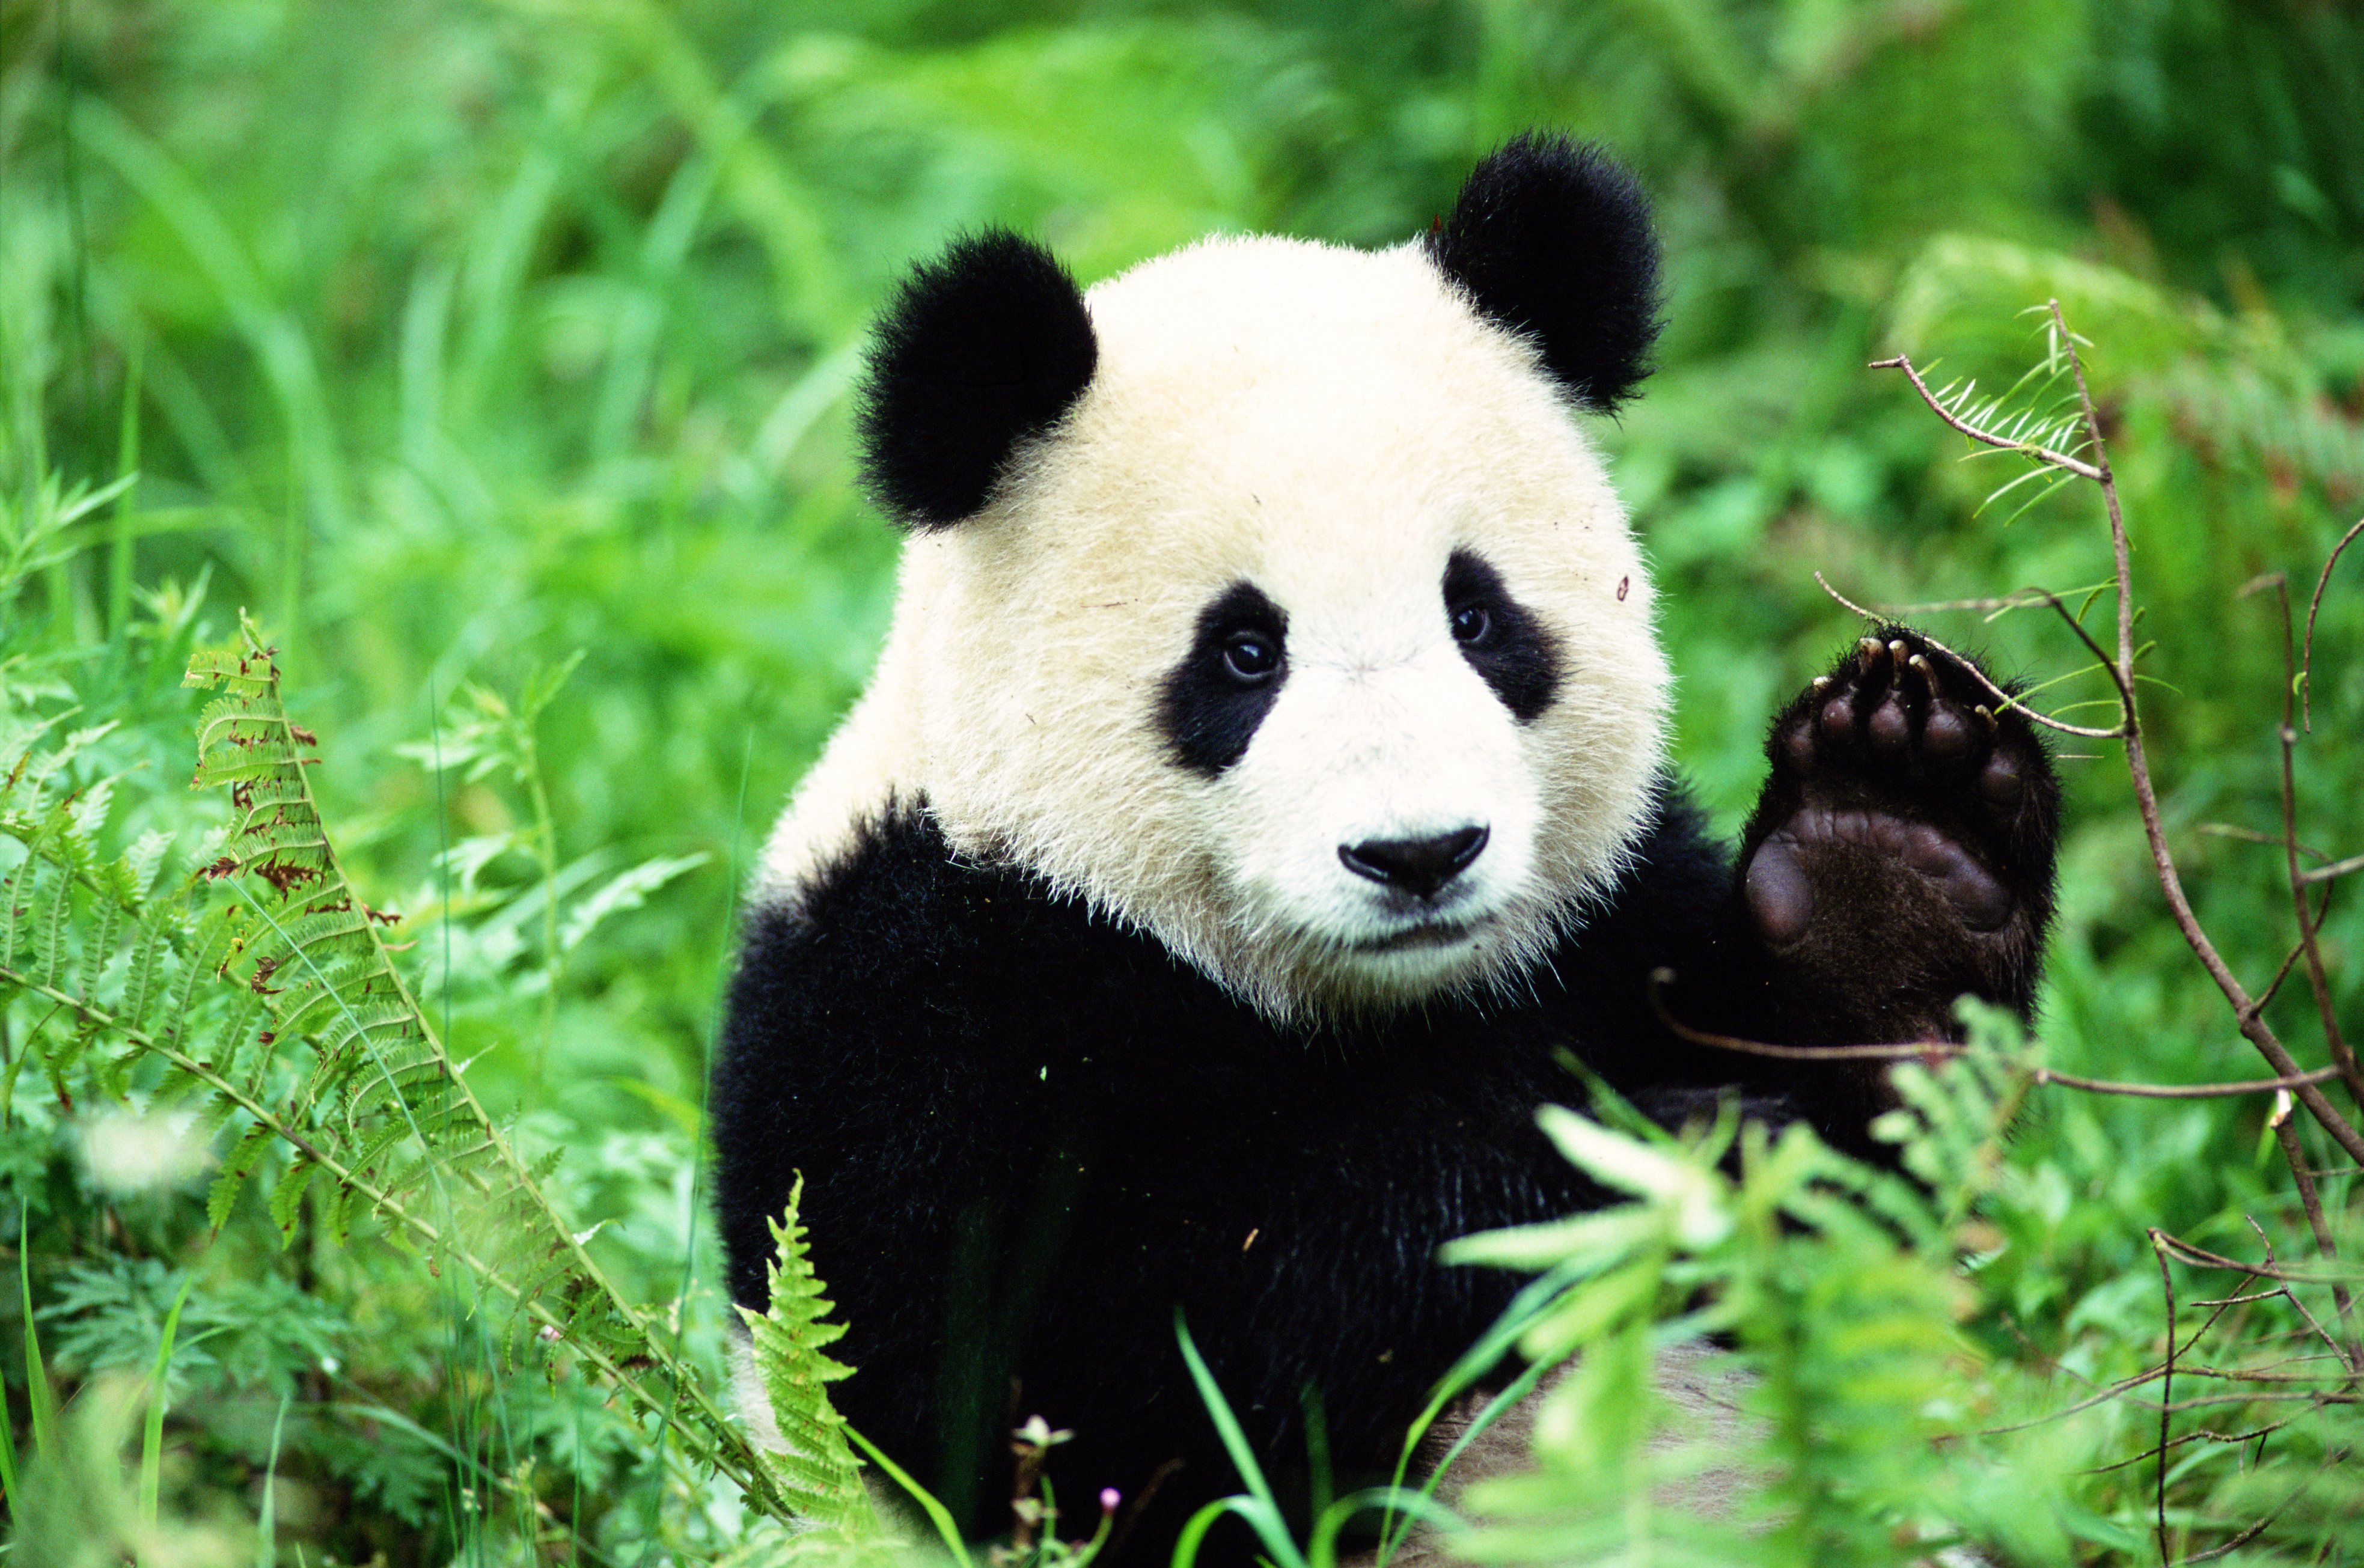 panda in the grass